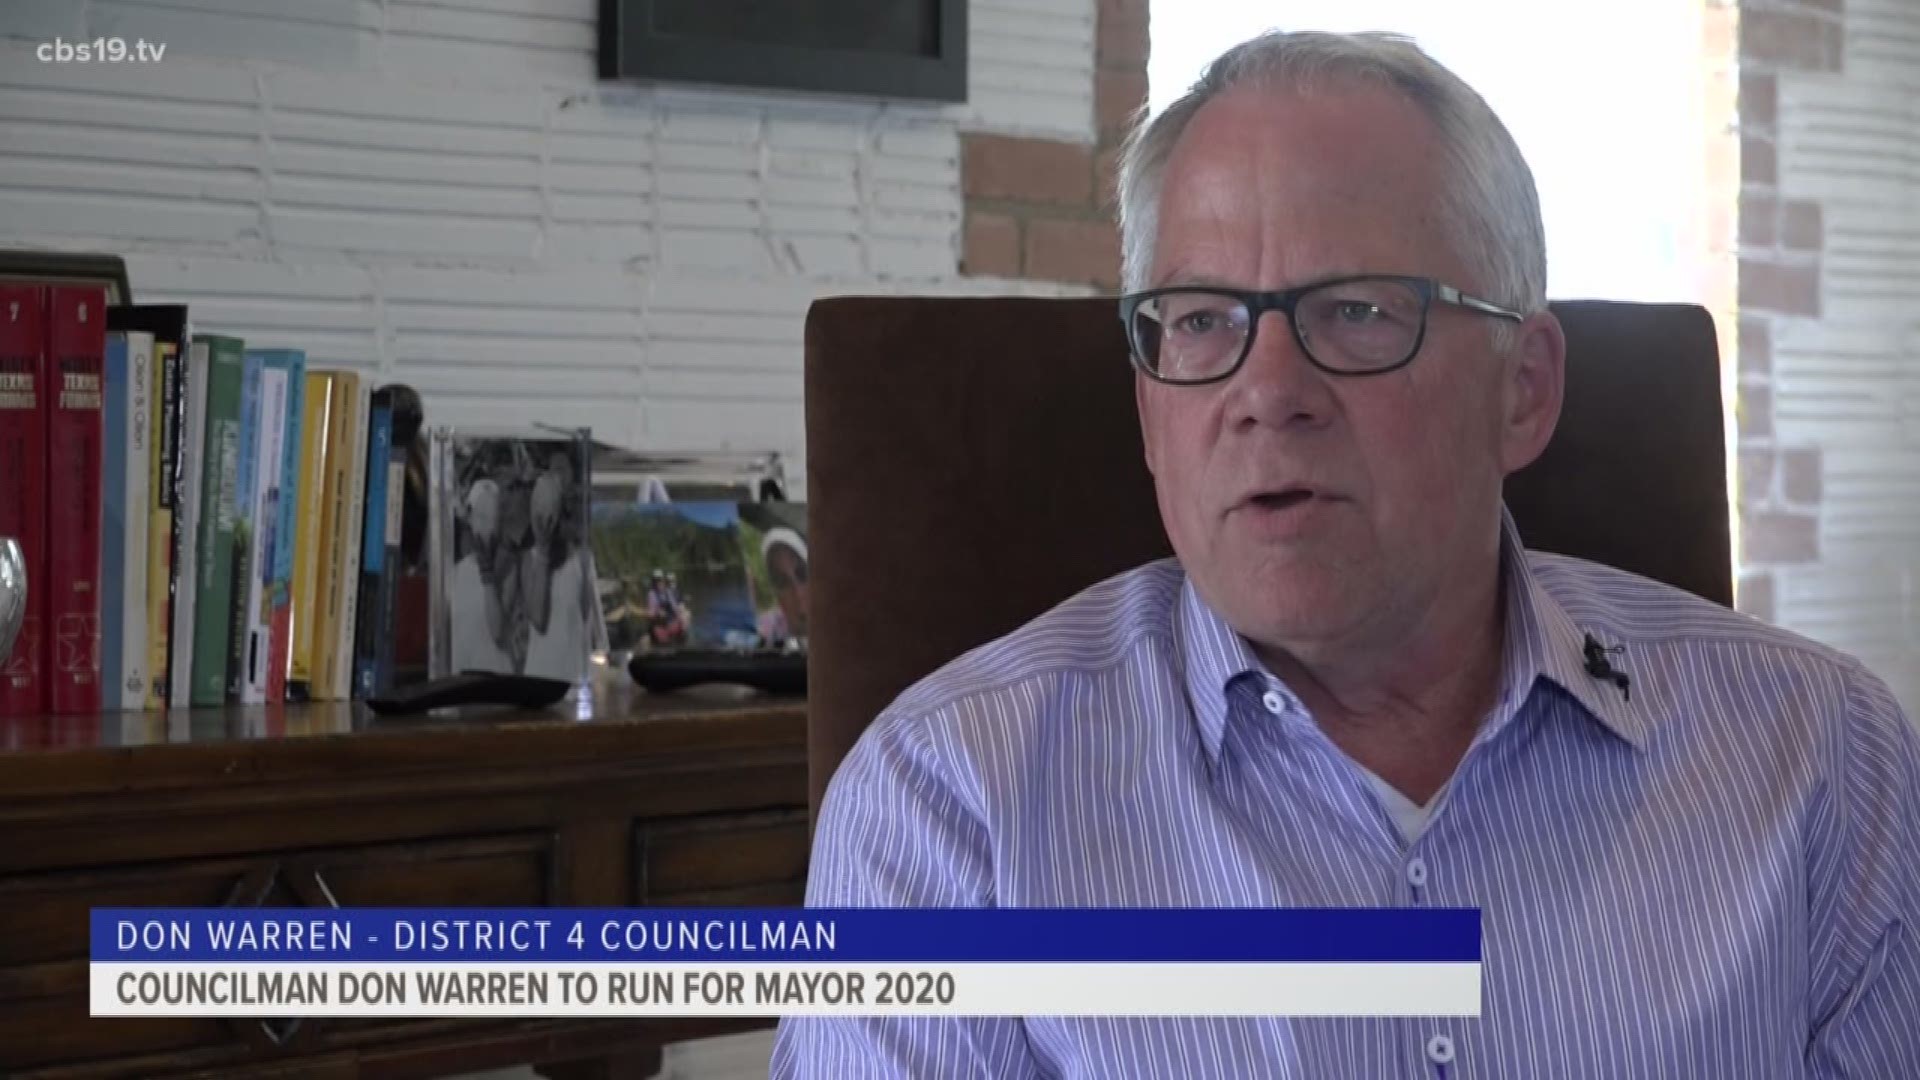 Don Warren announces he will run for mayor in 2020